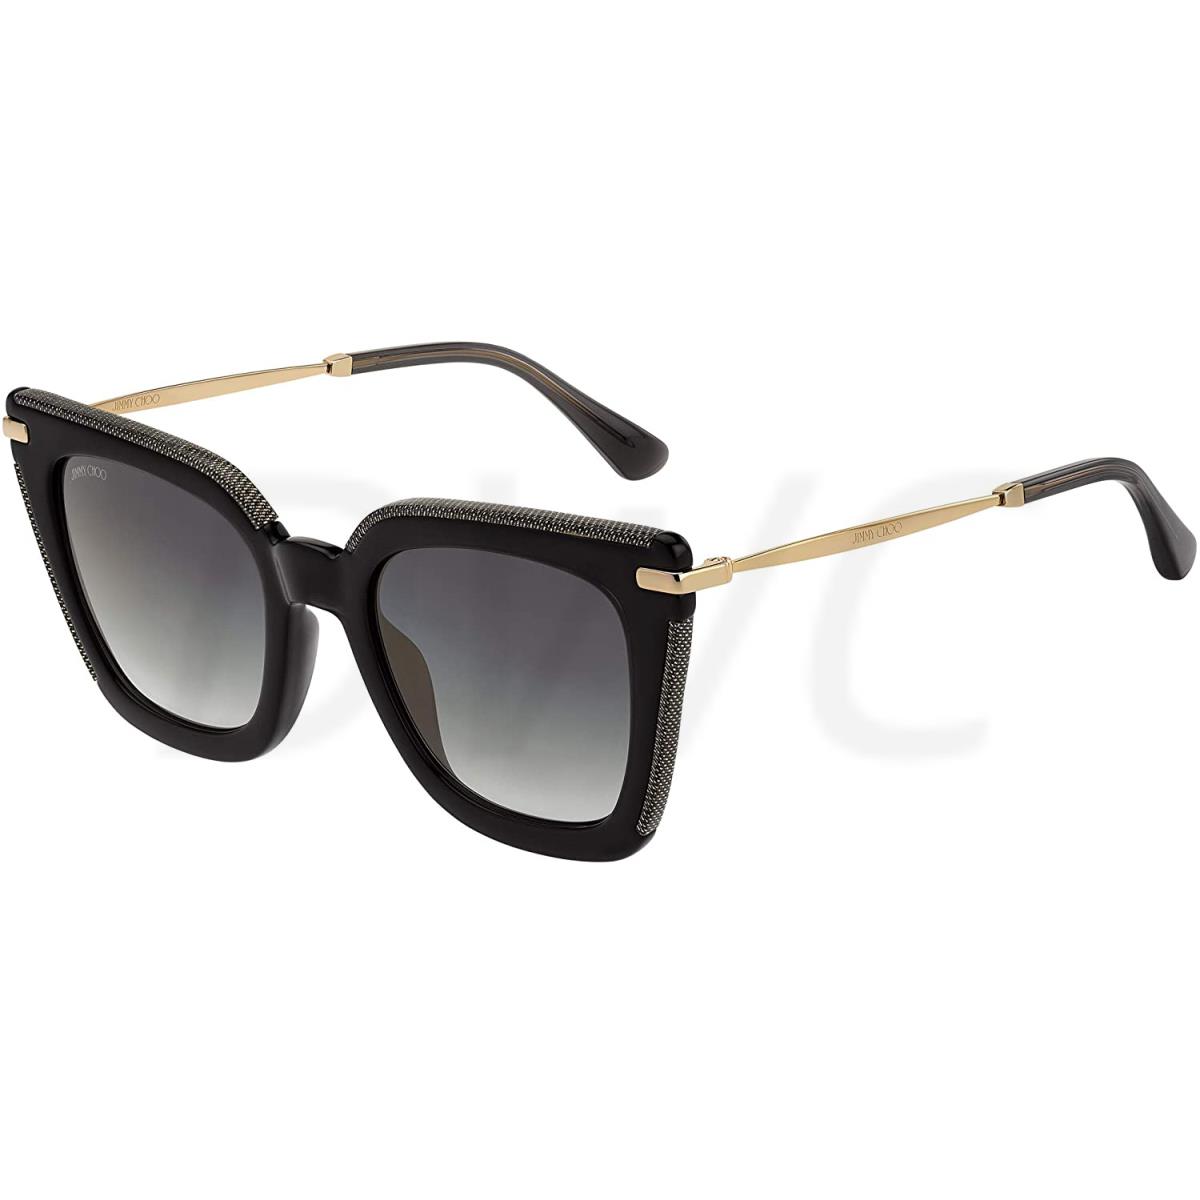 Jimmy Choo Ciara/g/s Black/grey Shaded 52-22-145 Women Sunglasses - Frame: Gray, Lens: Gray